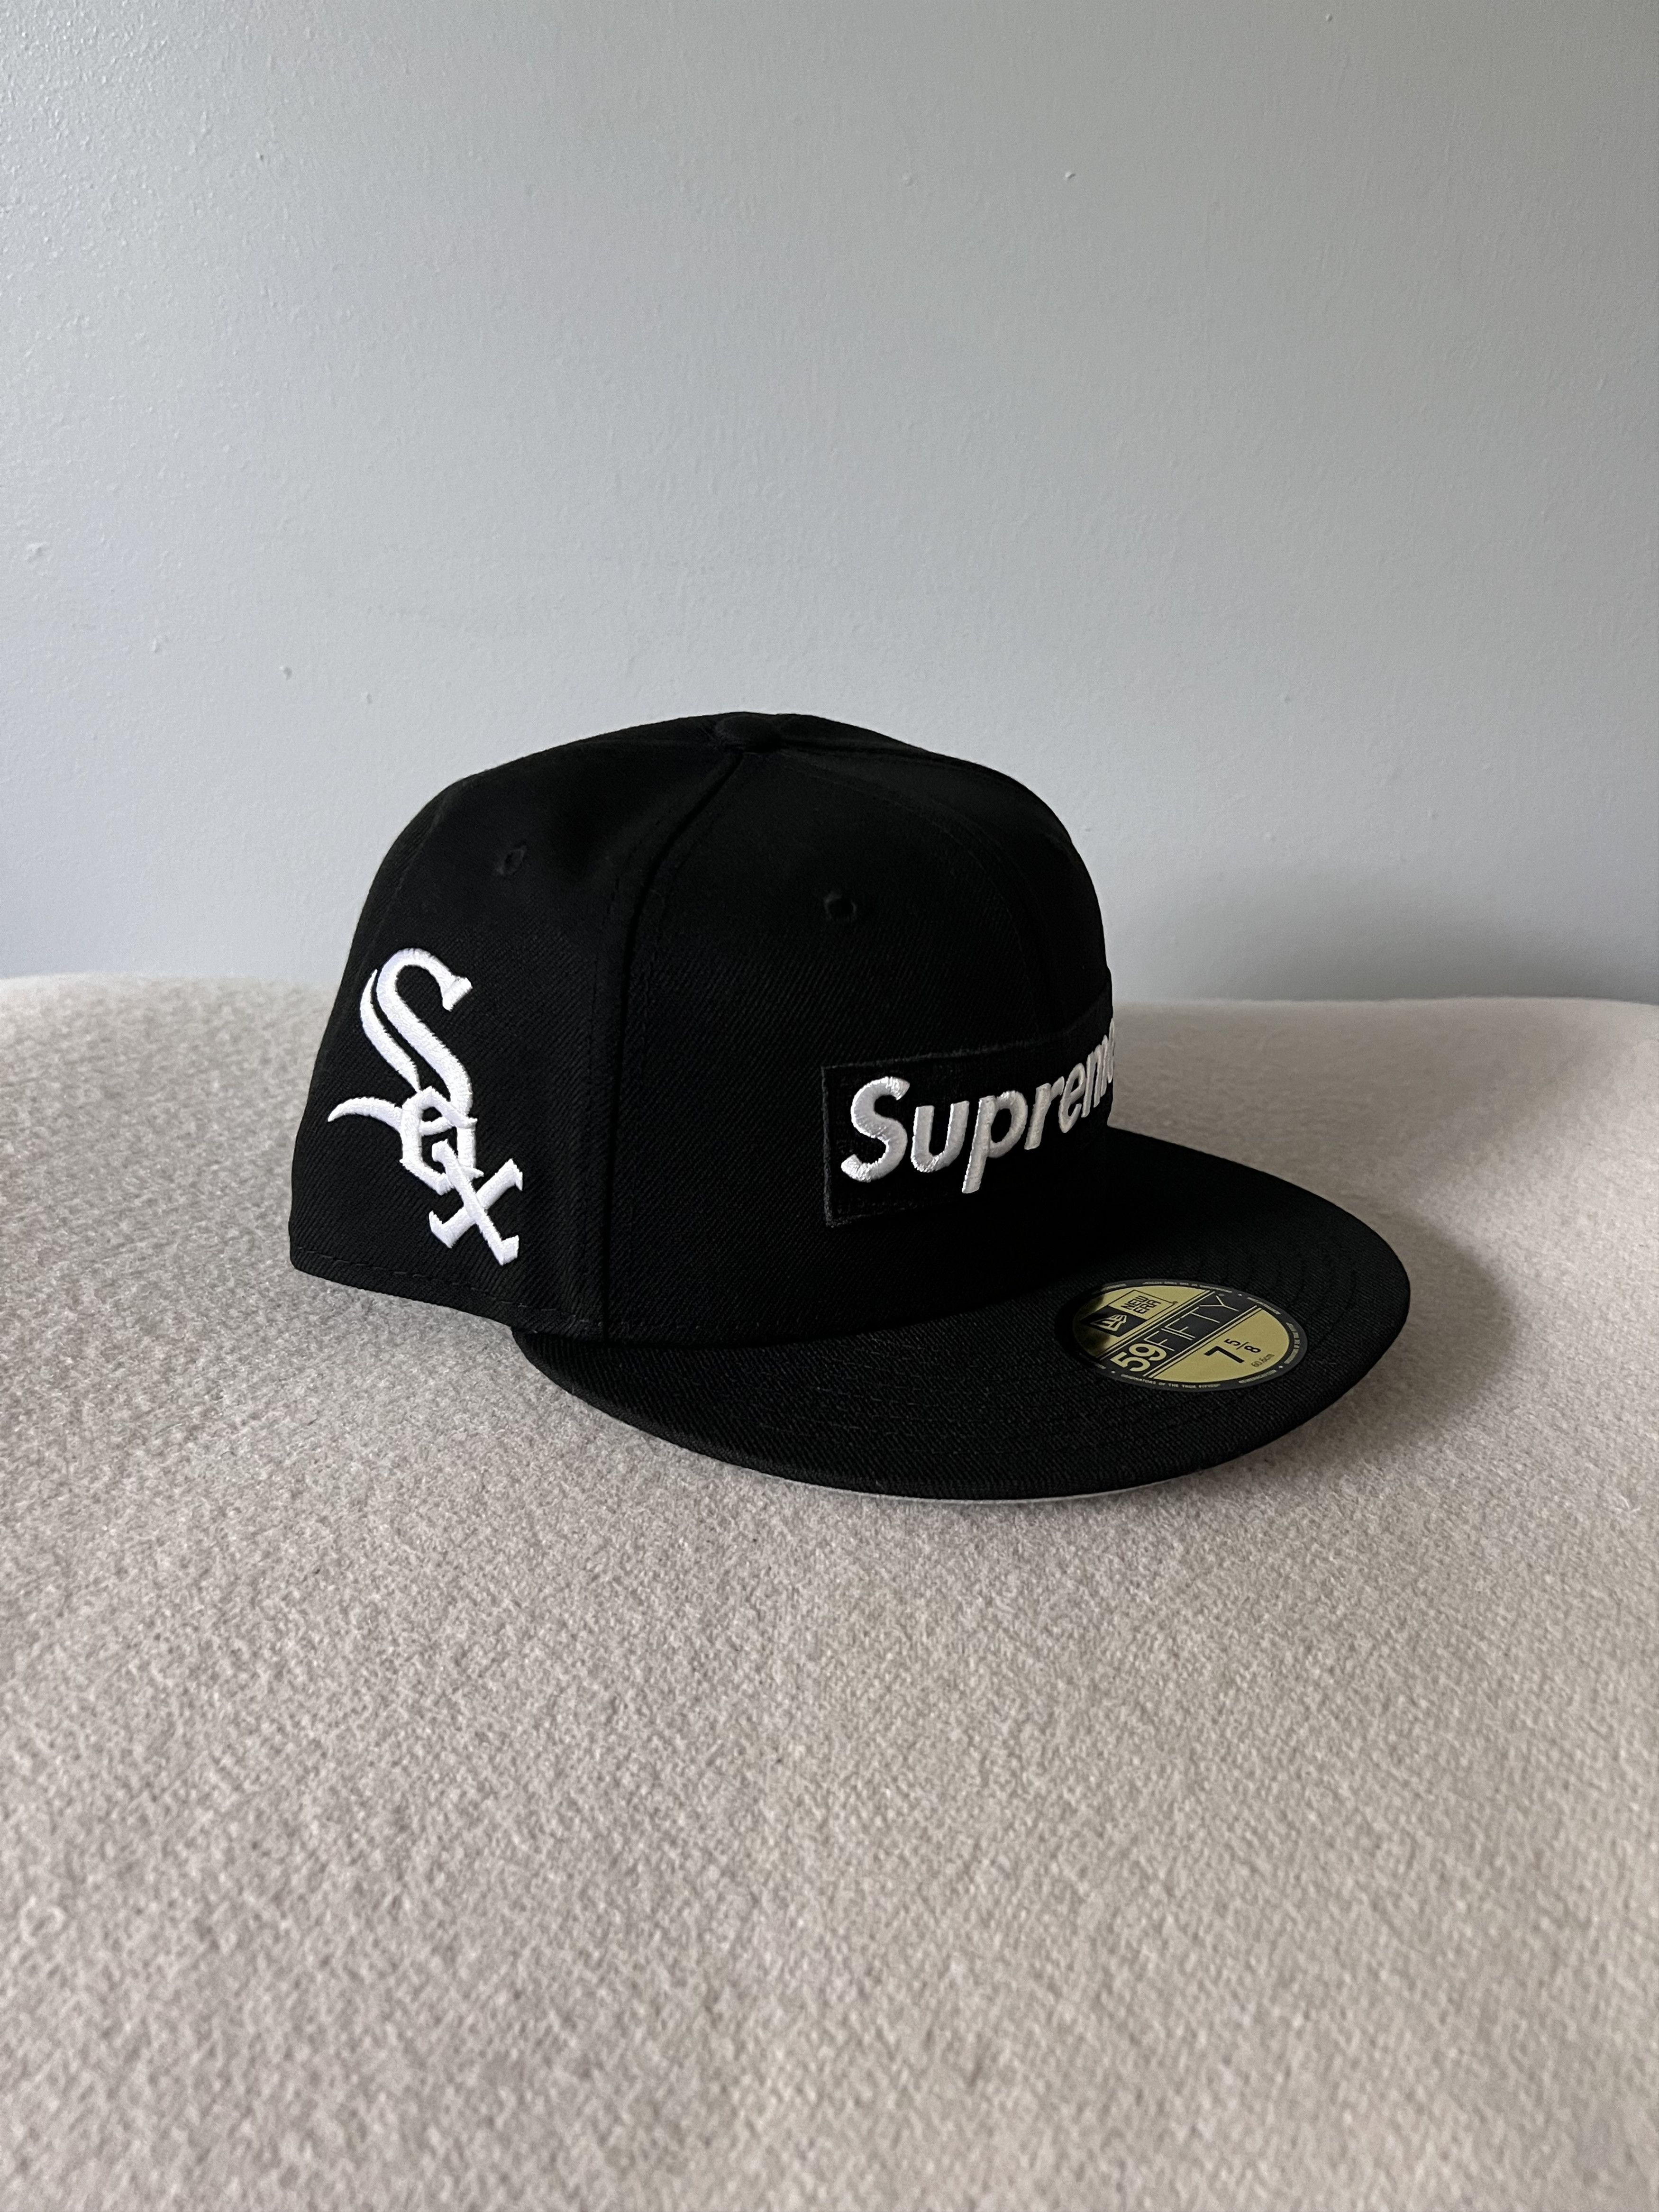 Supreme 7 5/8 Supreme New Era White Sox 59FIFTY Box Logo Fitted 